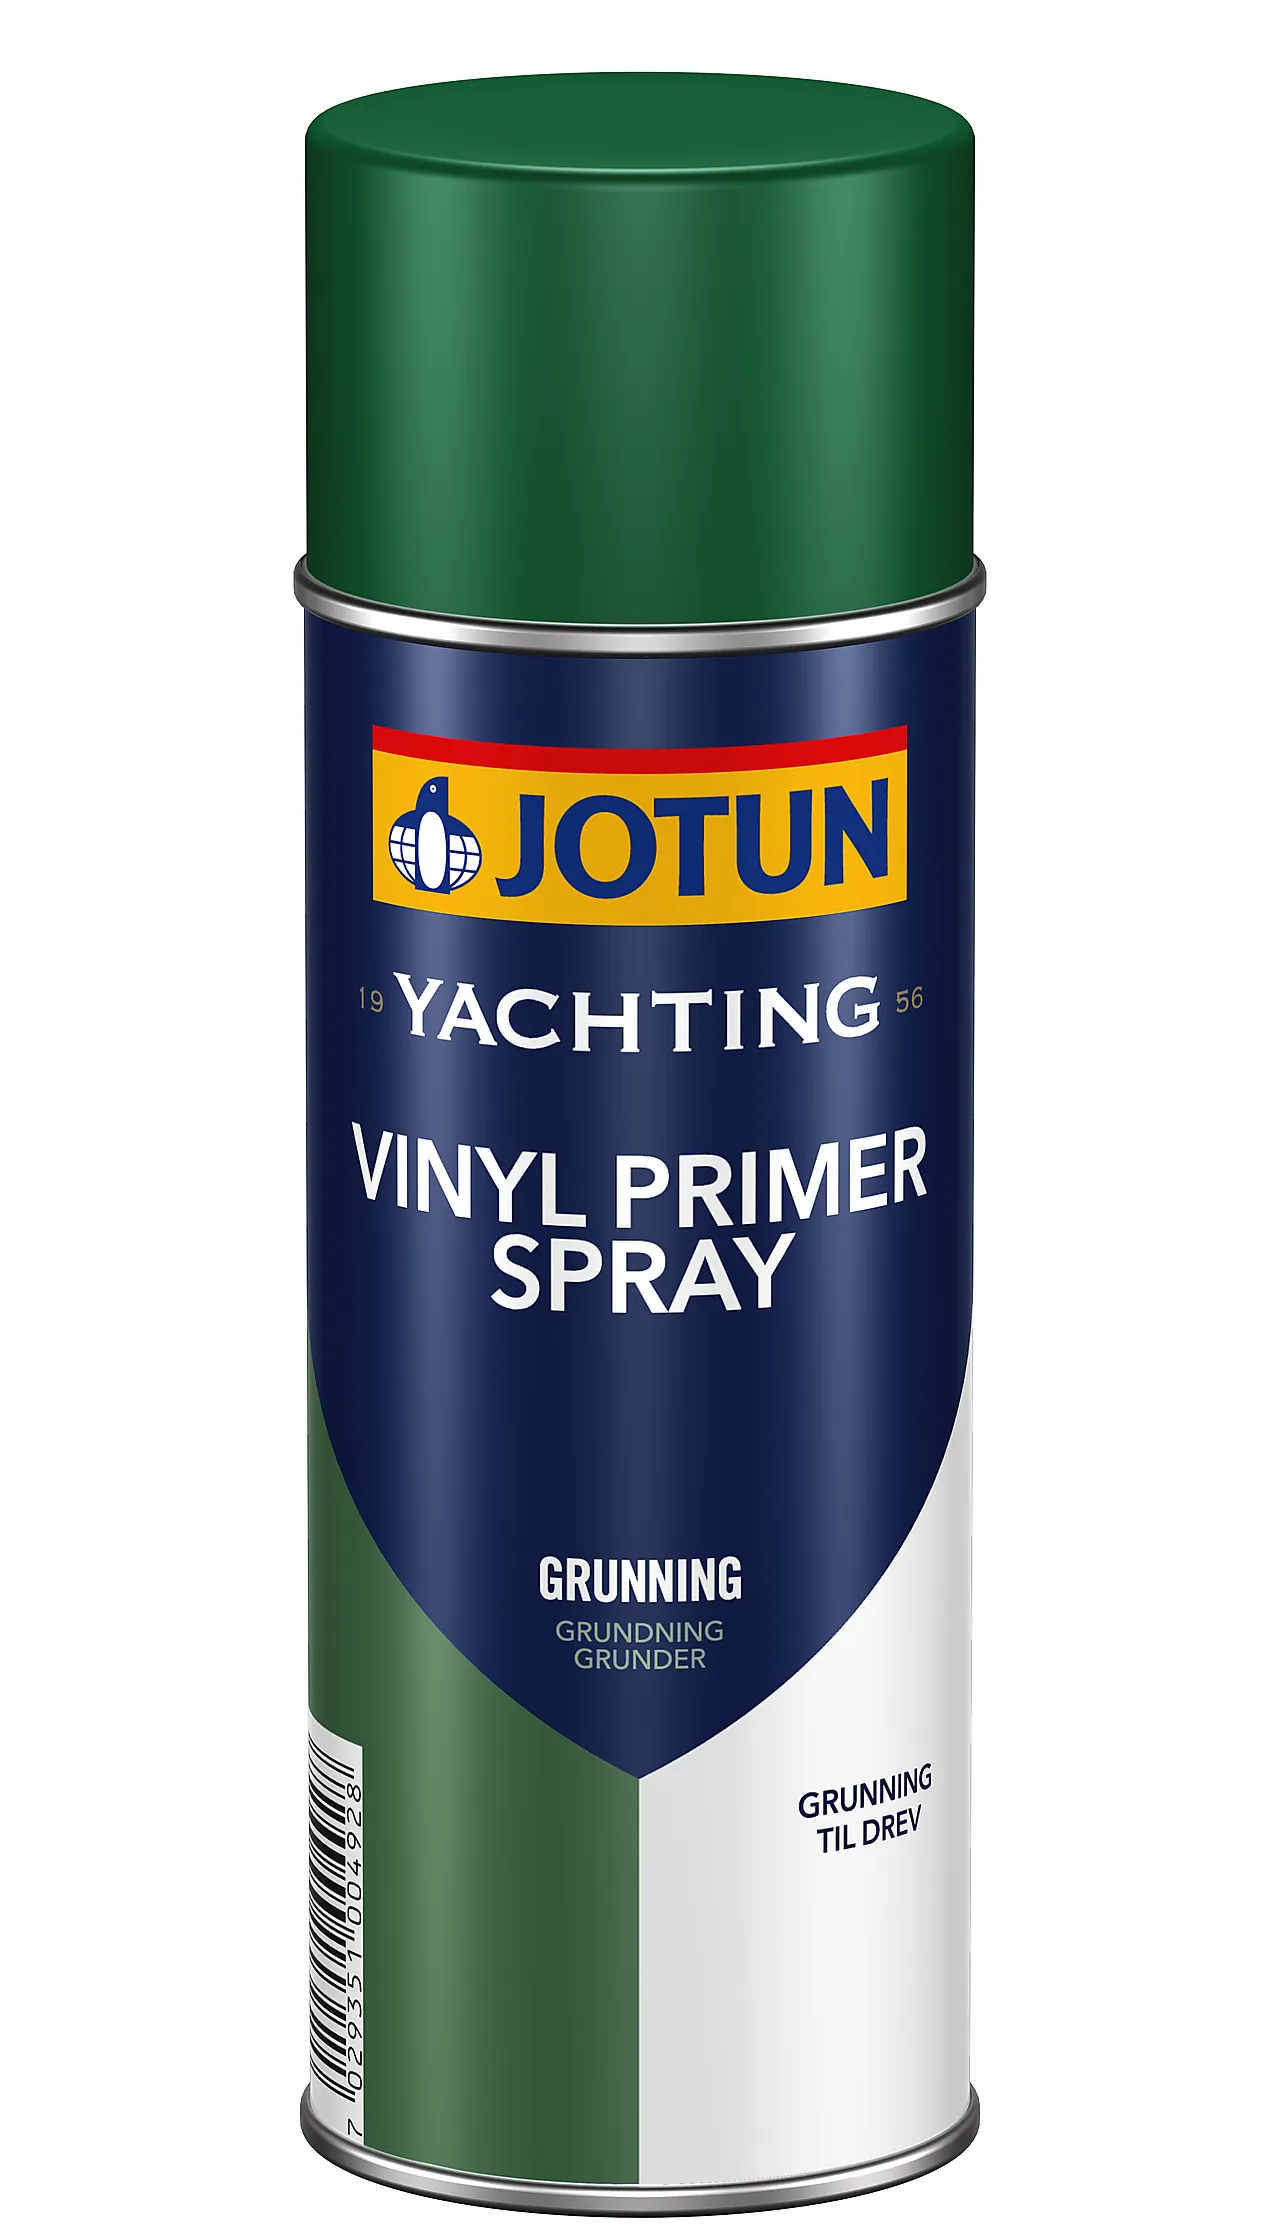 Jotun Vinyl Primer Spray 0,4 liter